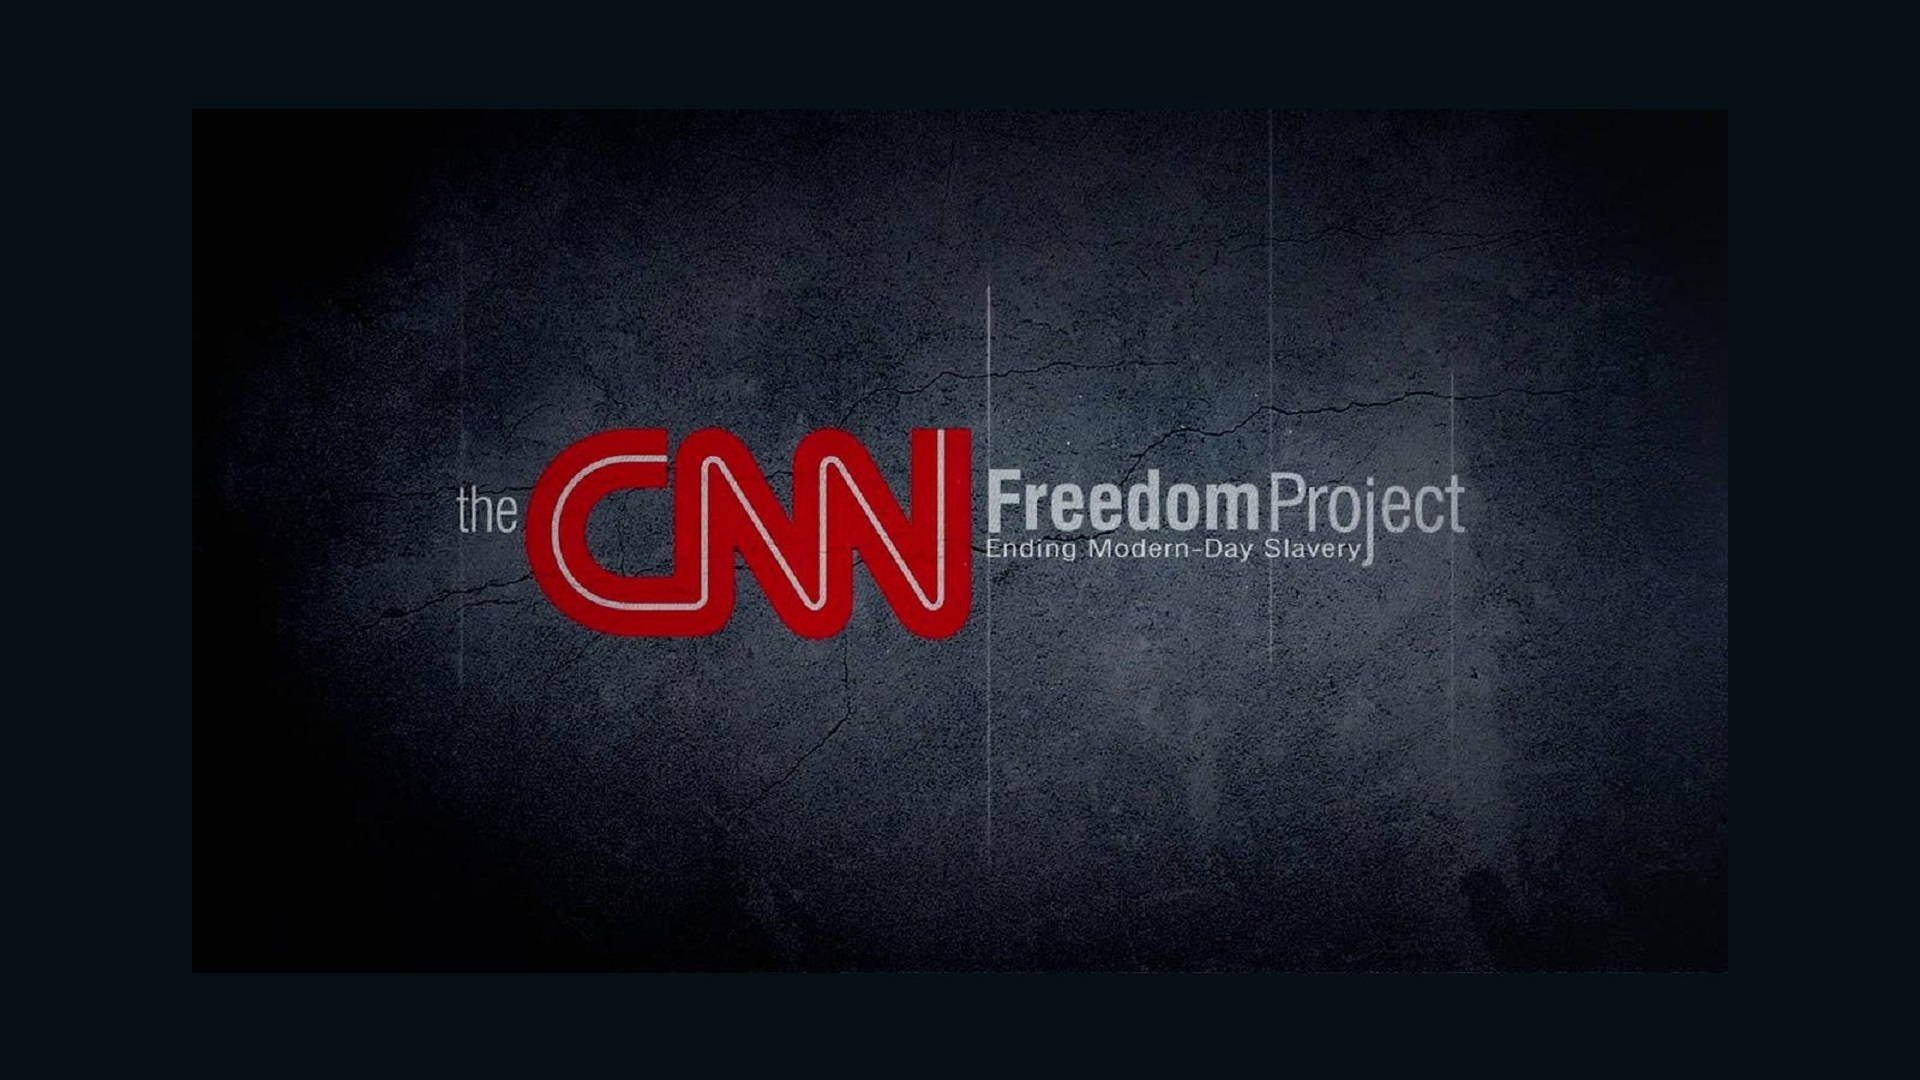 Cnn Freedom Project